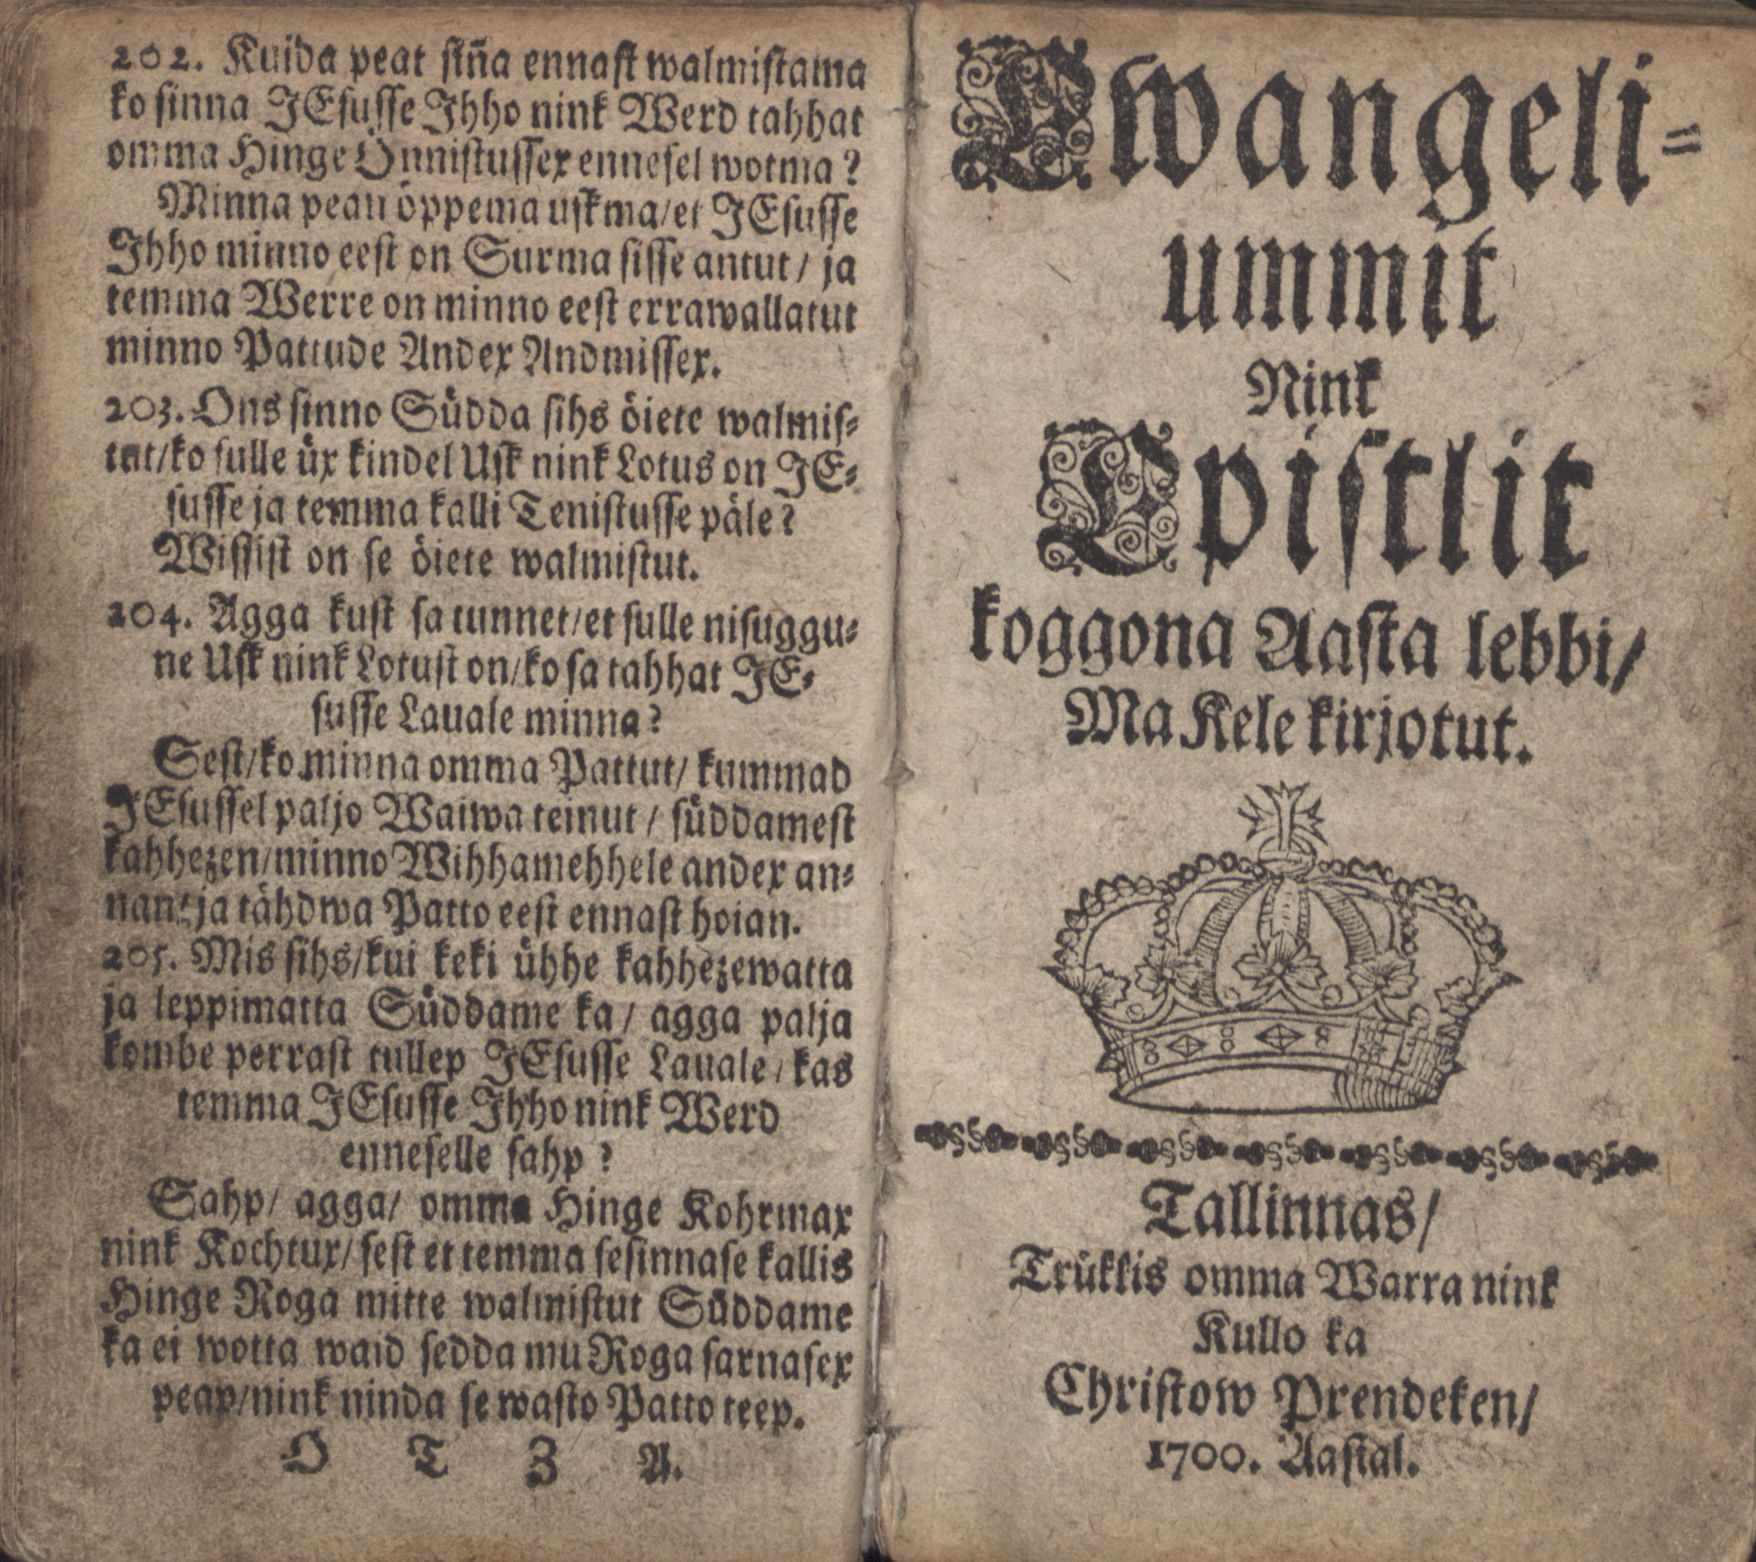 Ewangeliummit Nink Epistlit (1700) | 1. Titelblatt